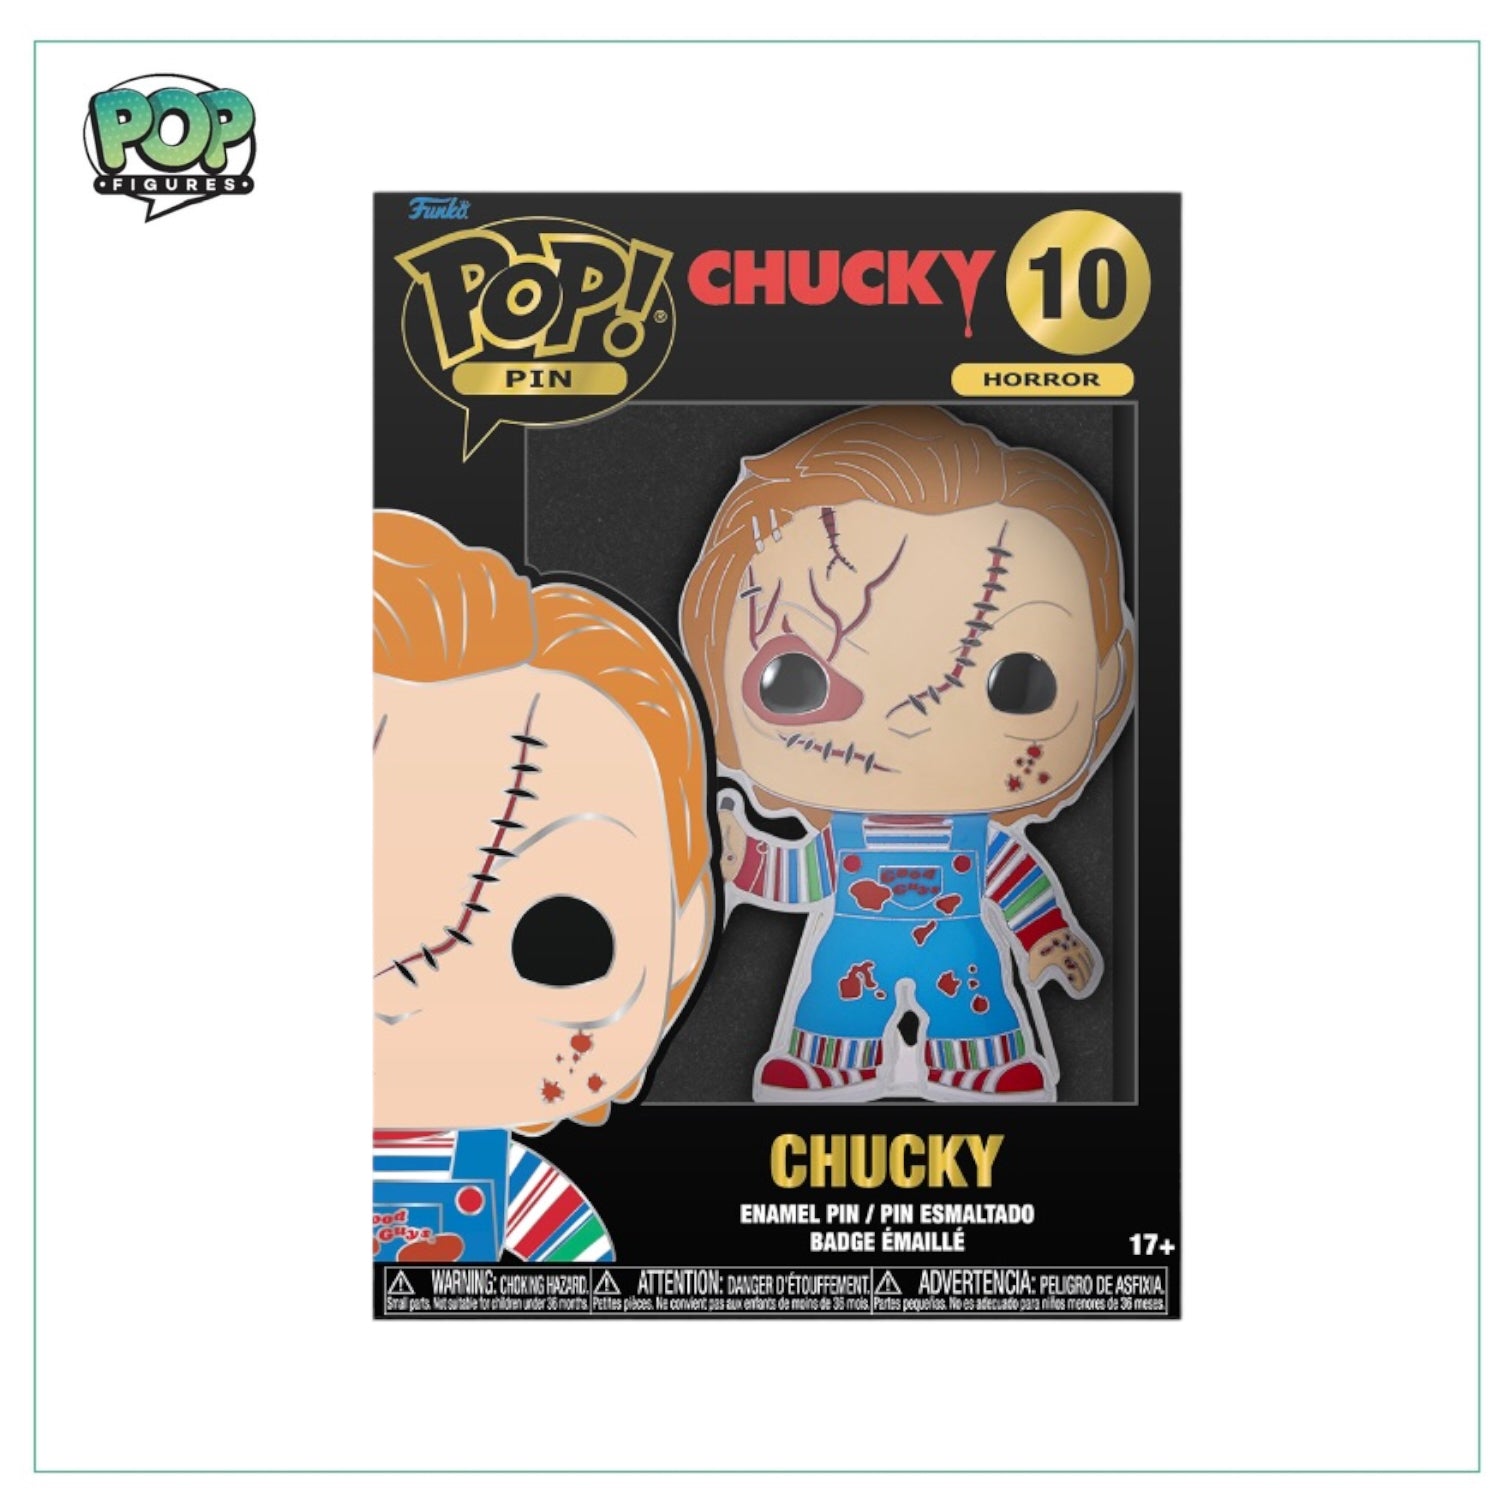 Chucky #10 Funko Enamel Pop! Pin - Chucky